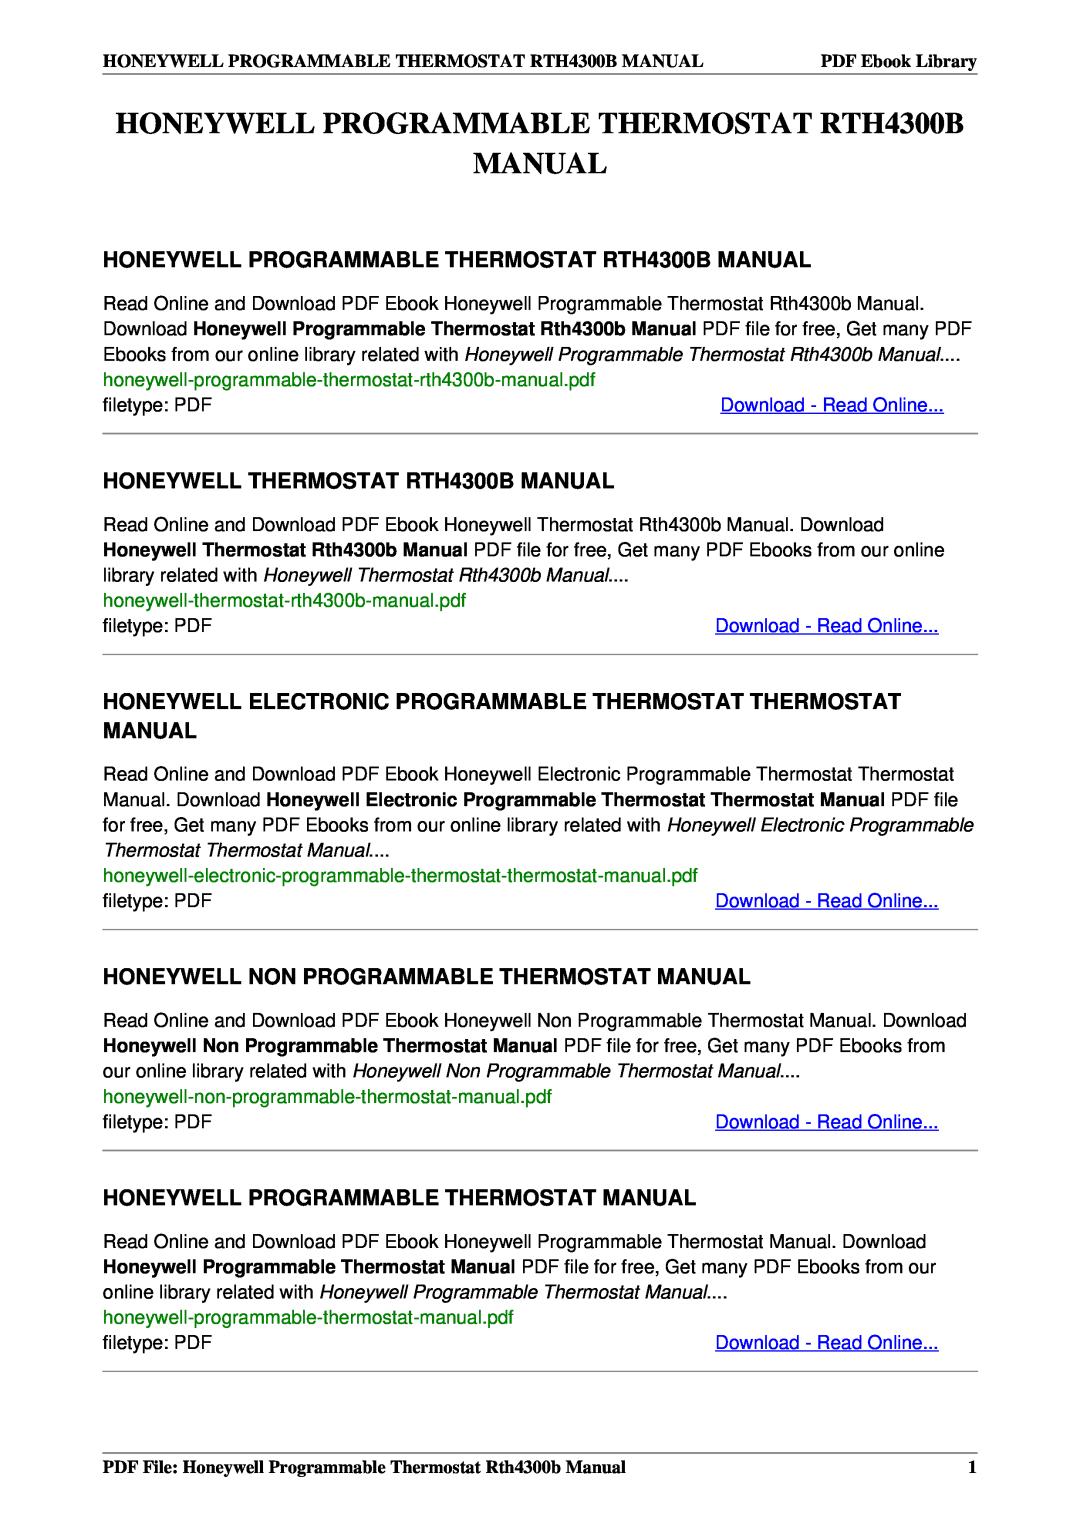 Honeywell manual HONEYWELL PROGRAMMABLE THERMOSTAT RTH4300B MANUAL, HONEYWELL THERMOSTAT RTH4300B MANUAL, filetype PDF 